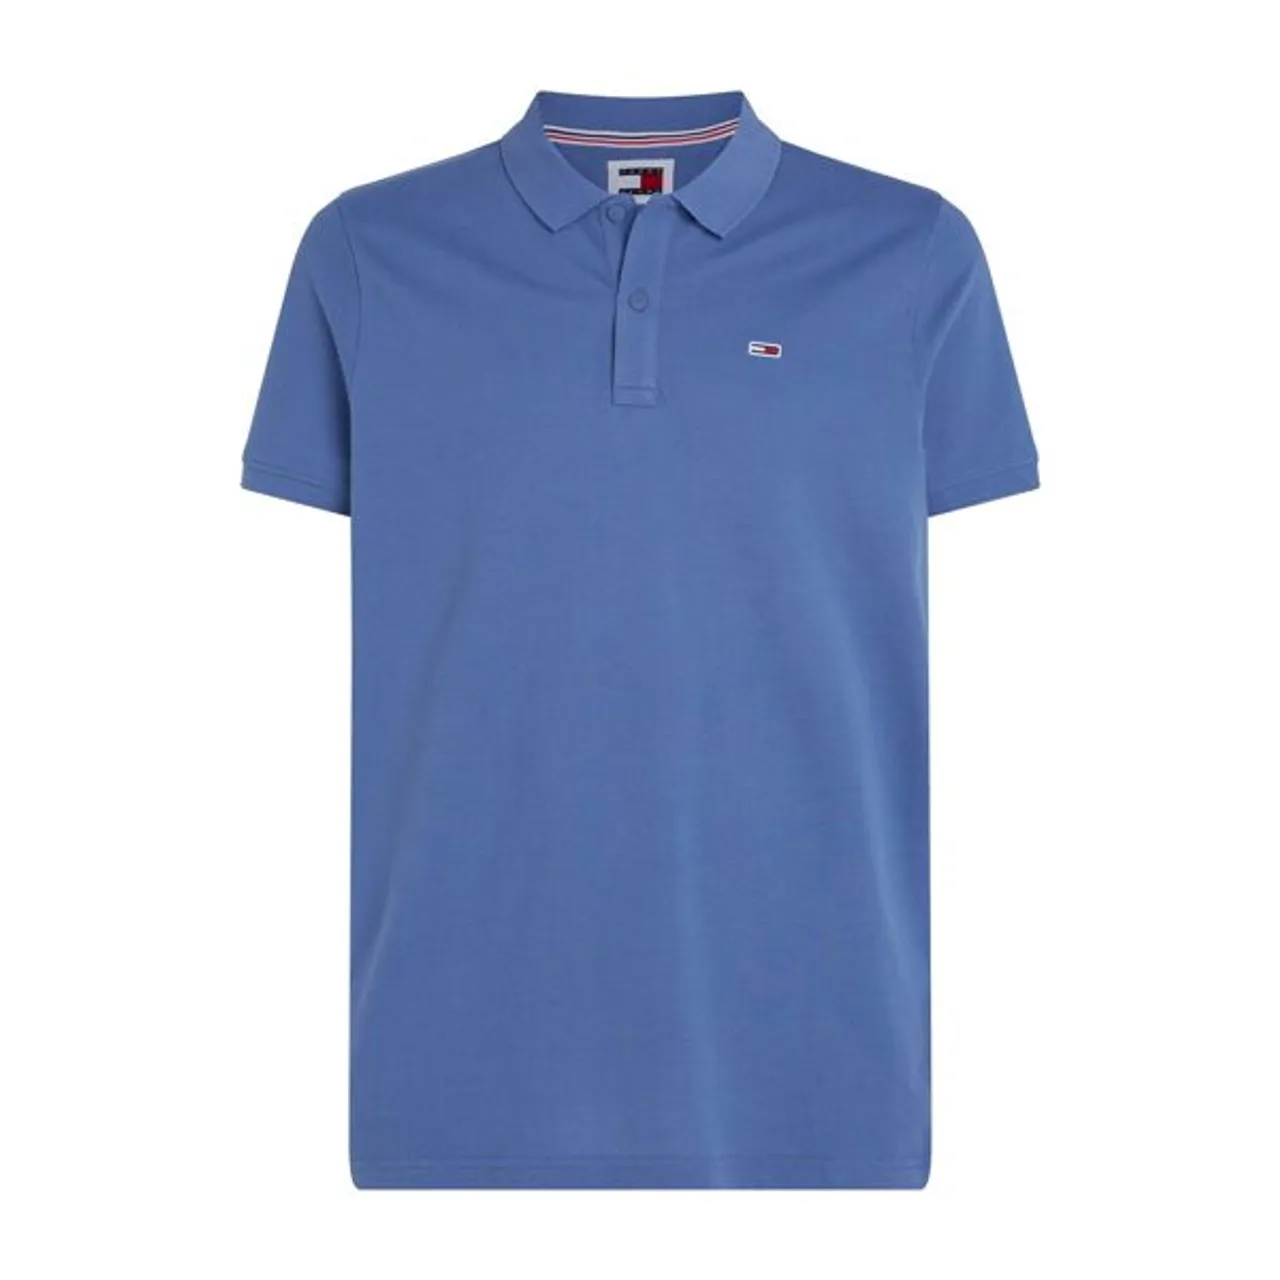 Poloshirt TOMMY JEANS "TJM SLIM PLACKET POLO" Gr. M, blau (charmed) Herren Shirts Kurzarm Piqué mit Polokragen